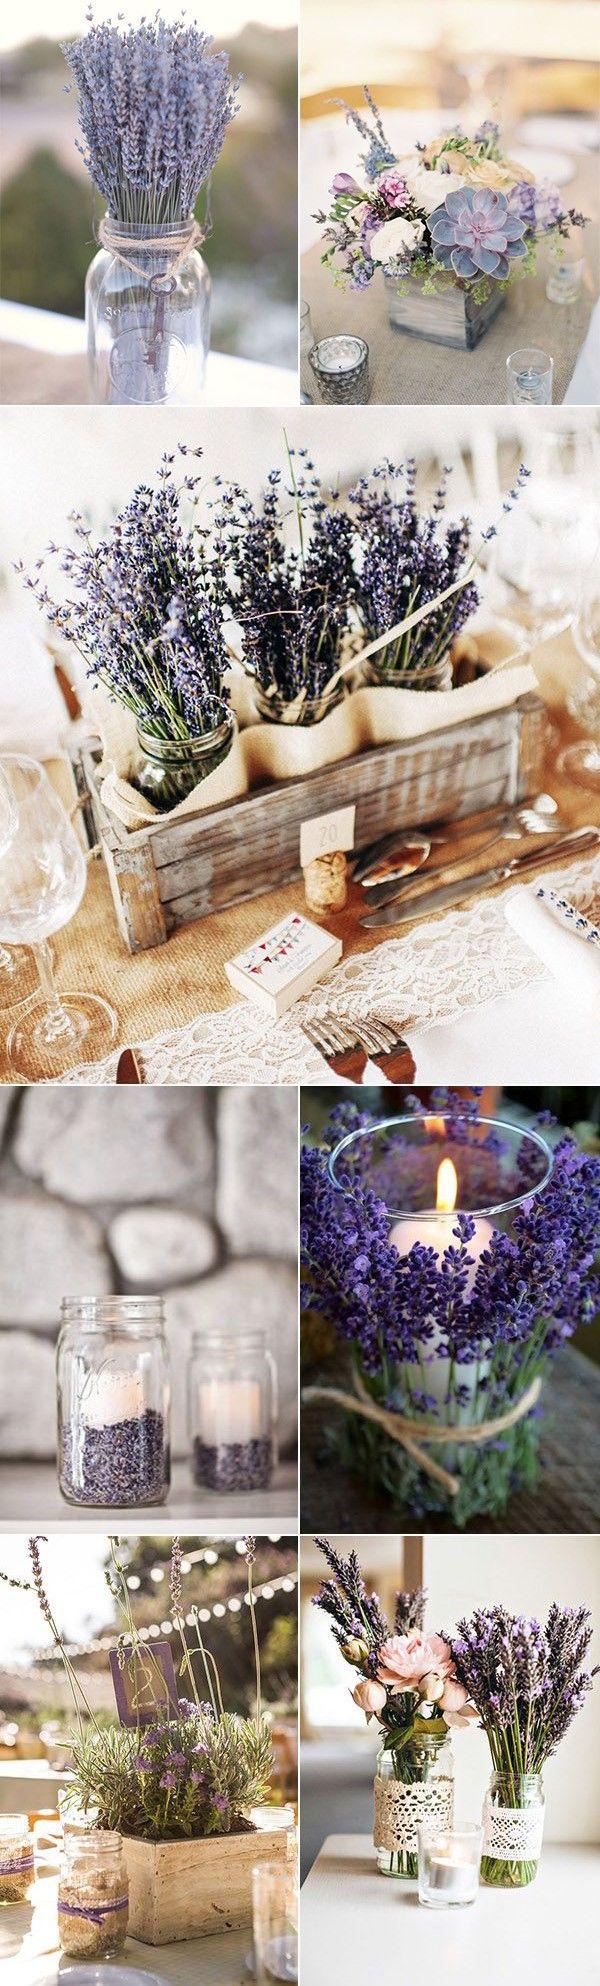 زفاف - Top 28 Stunning Lavender Wedding Ideas To Inspire Your Big Day - Page 2 Of 2